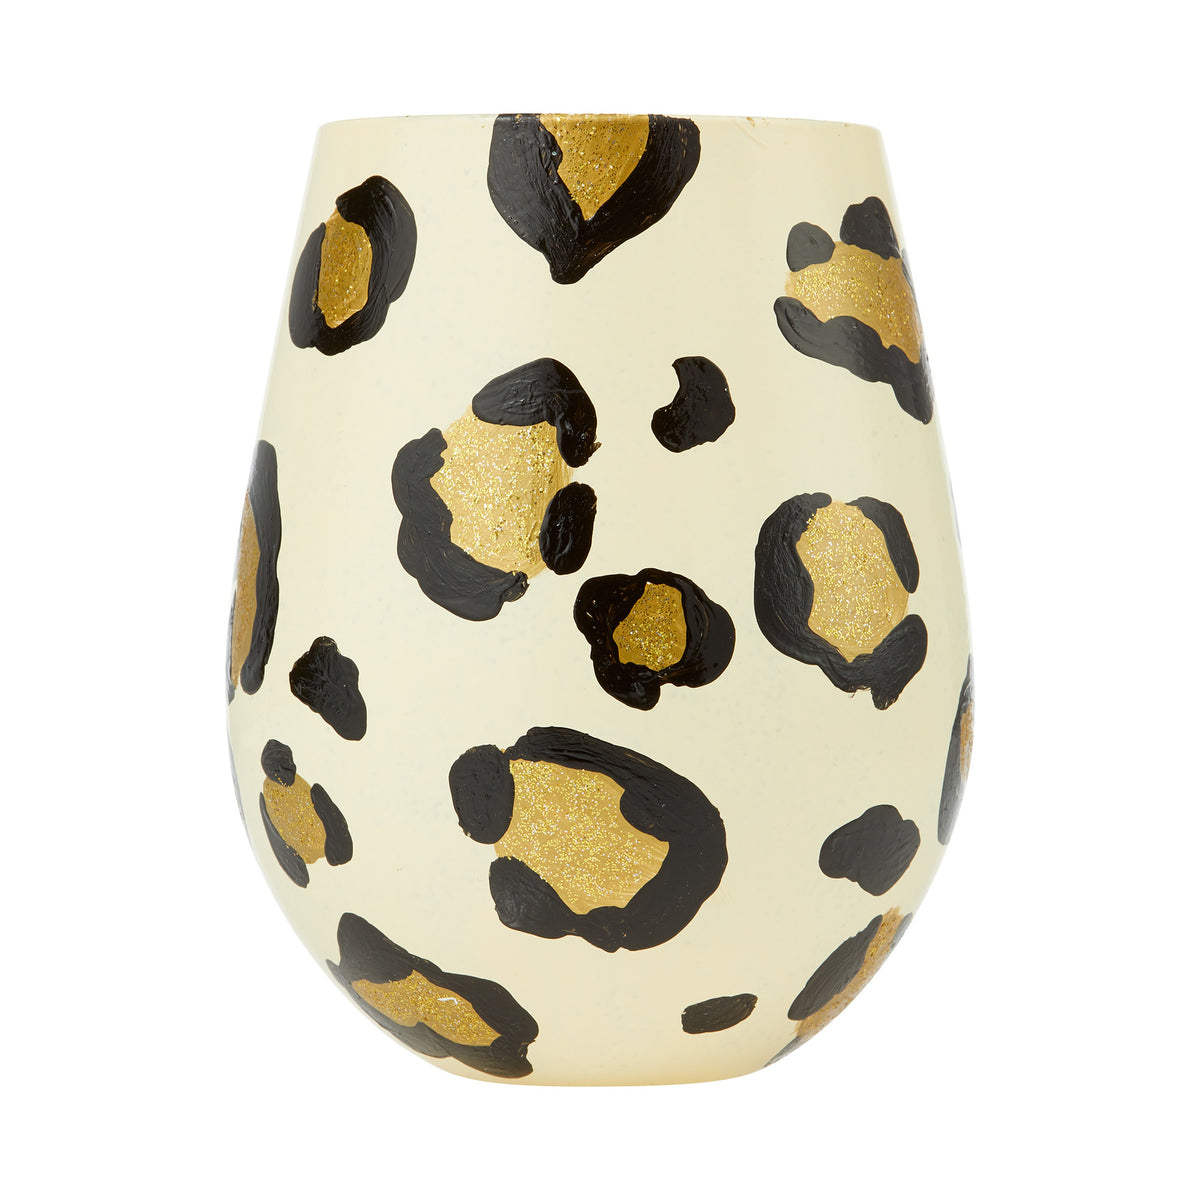 Leopard Wine Glass by Lolita